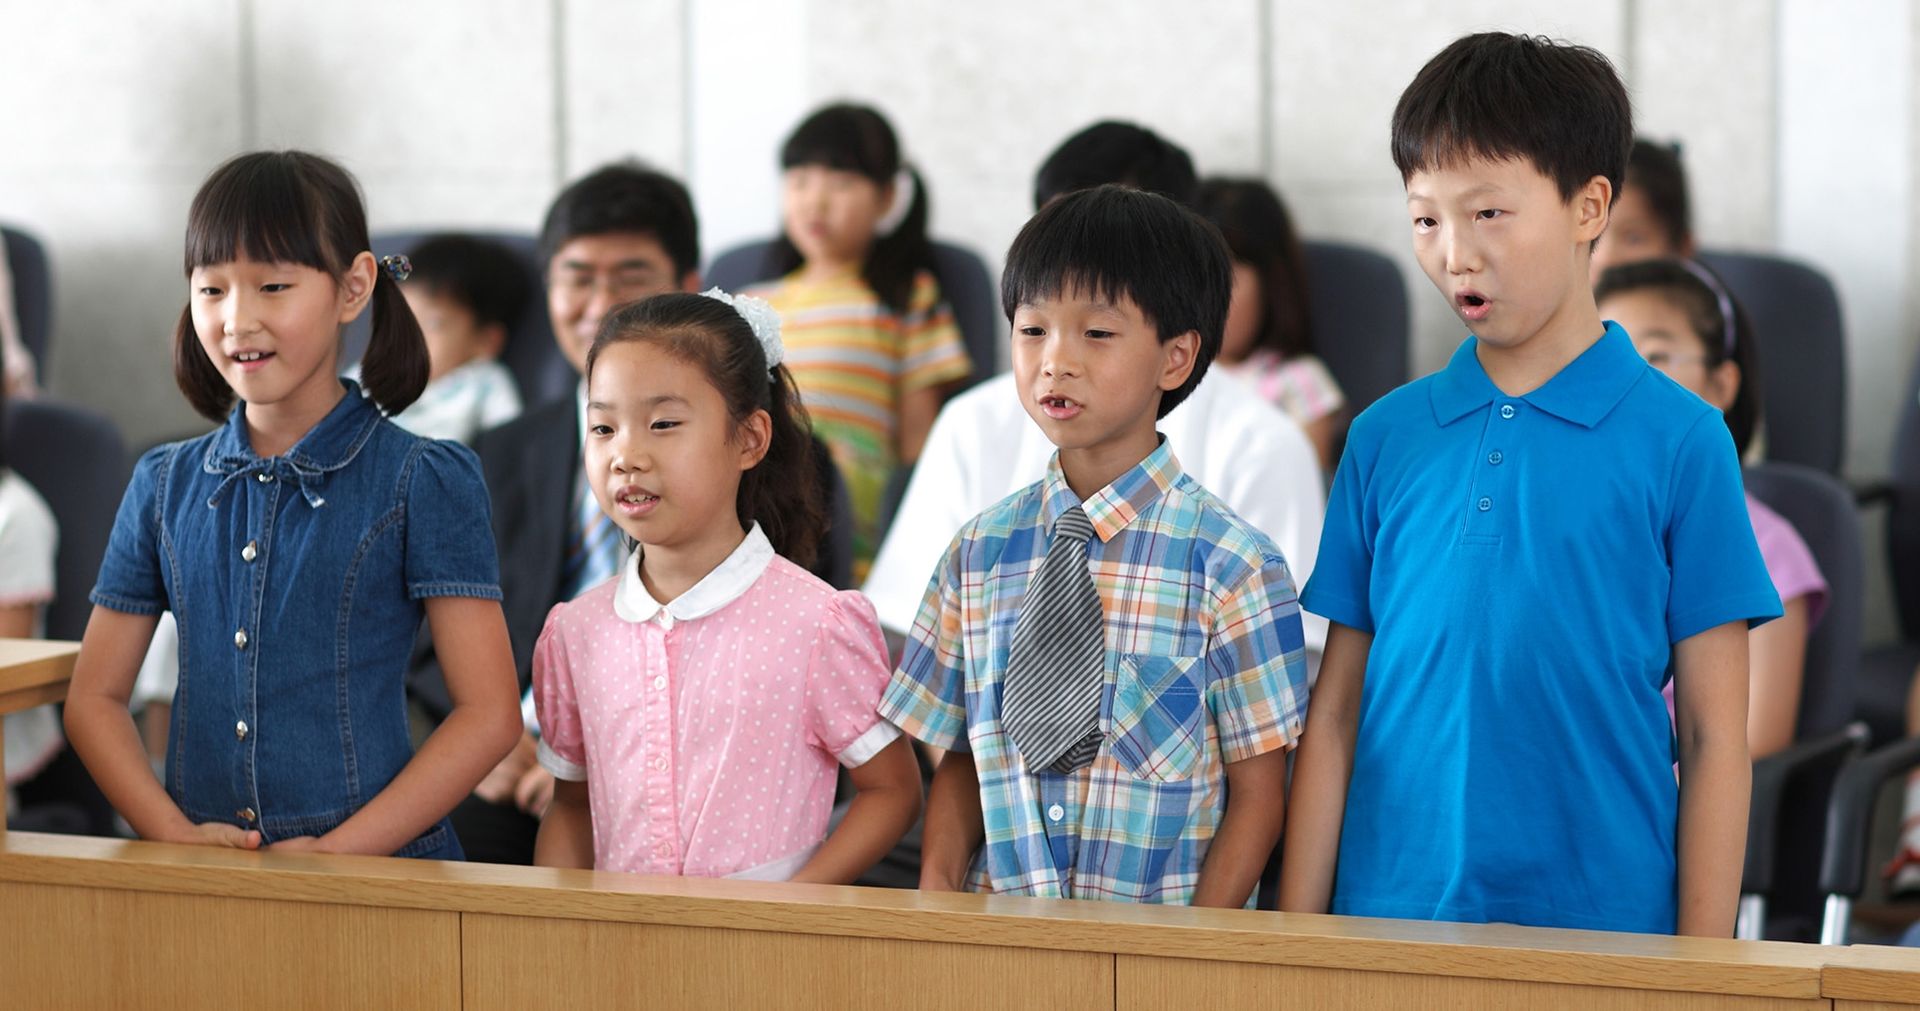 Primary-age children sing